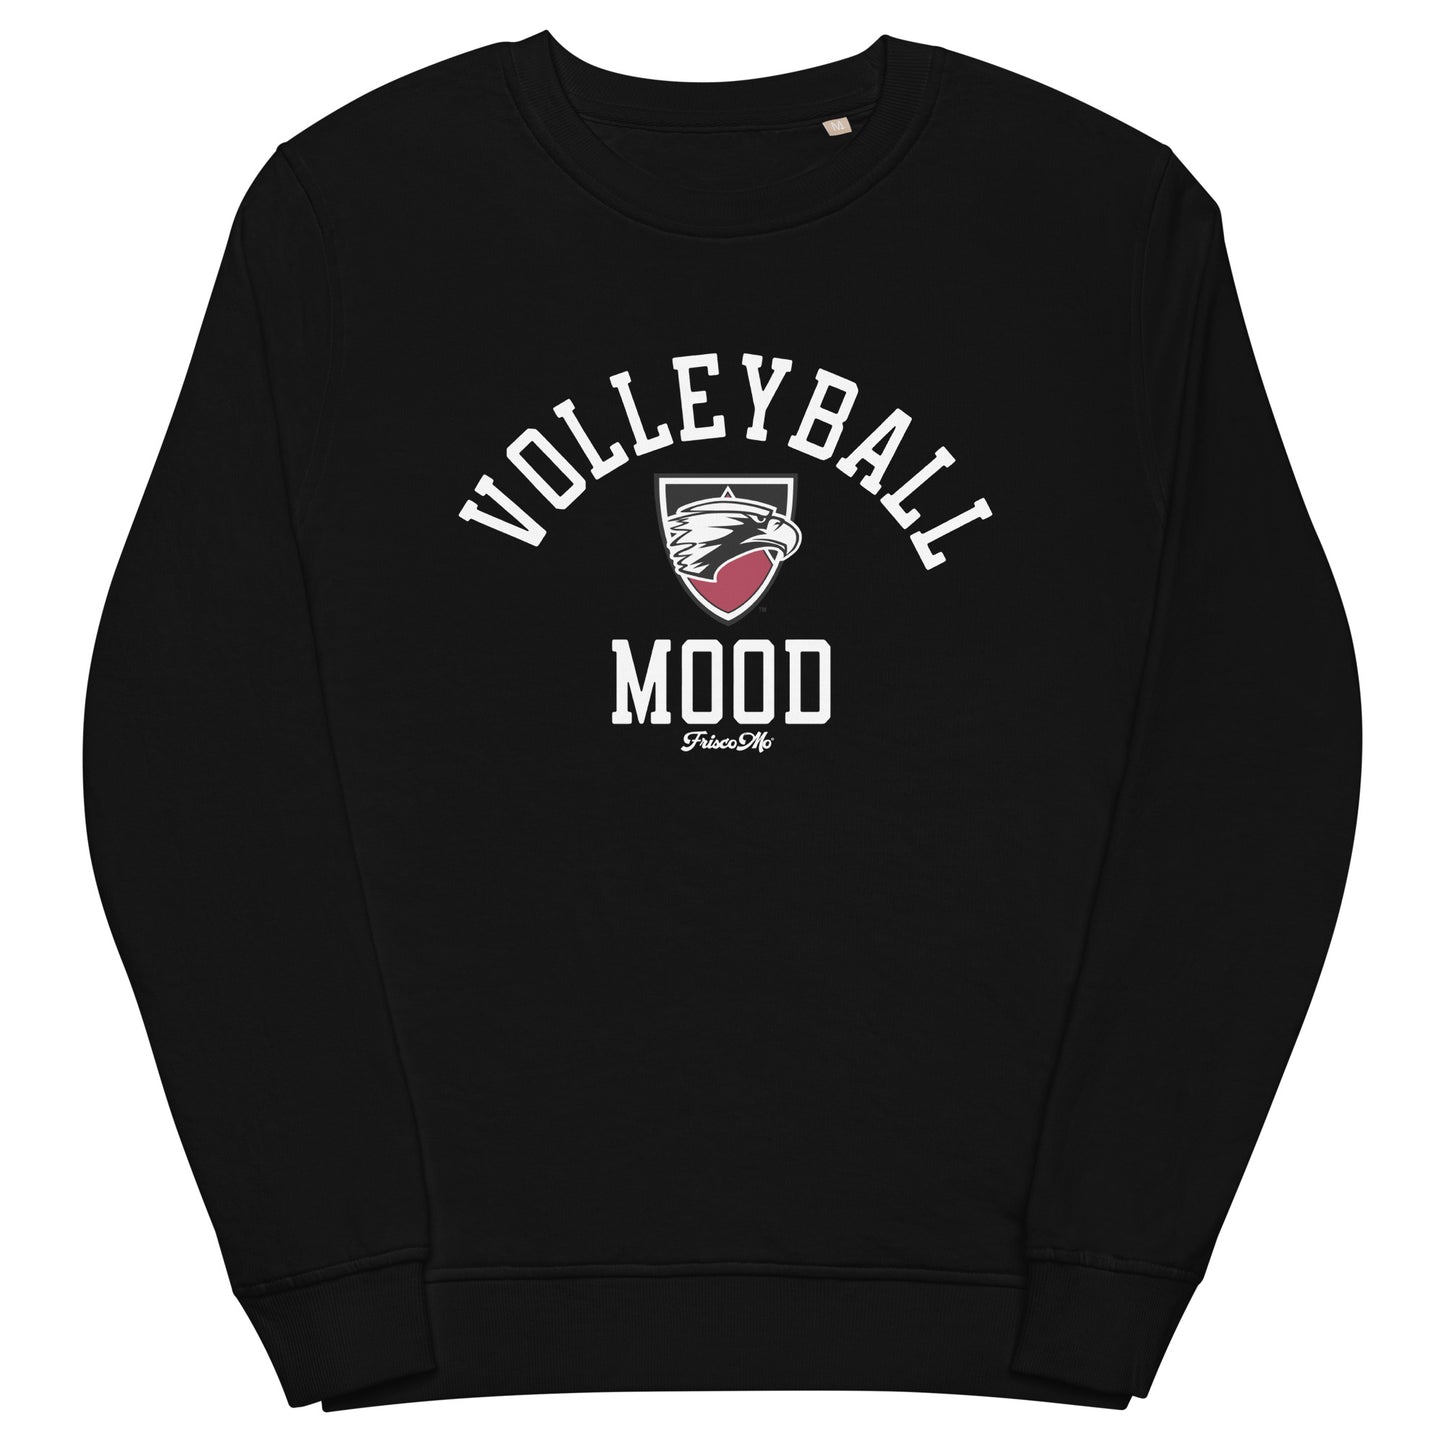 Edgewood Volleyball Mood Organic Crew